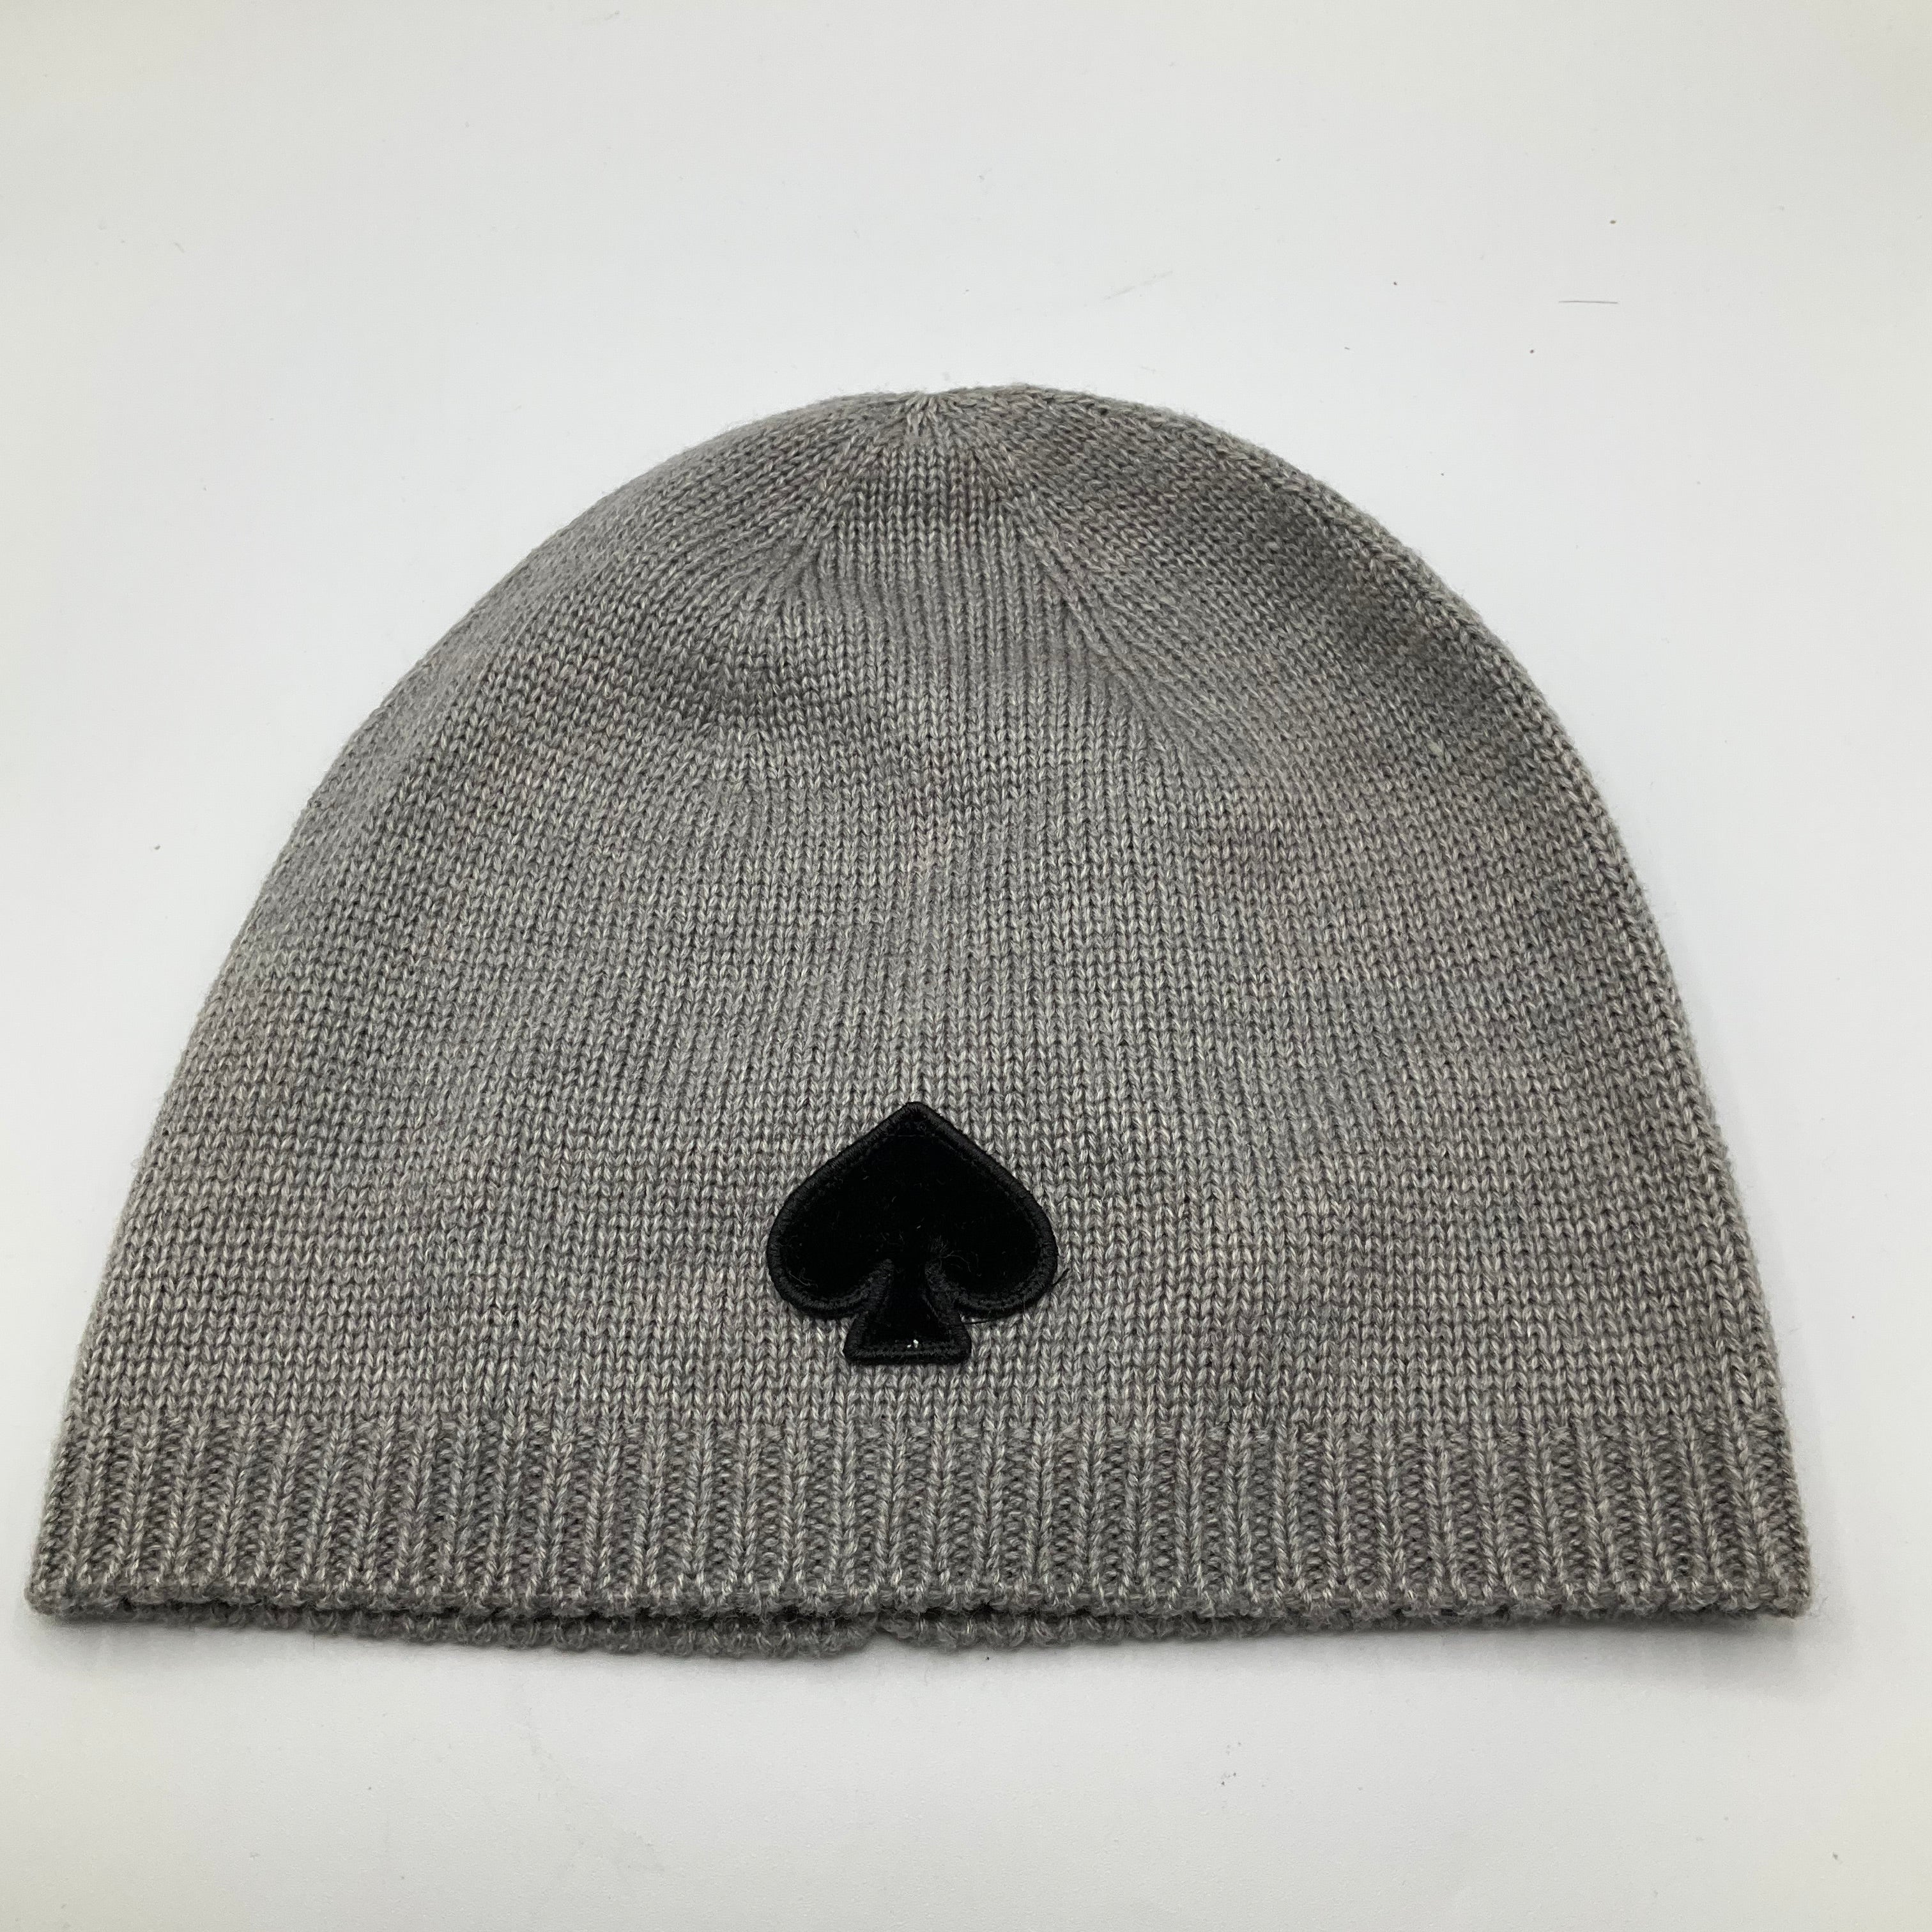 Hats – Clothes Mentor Fields Ertel OH #193